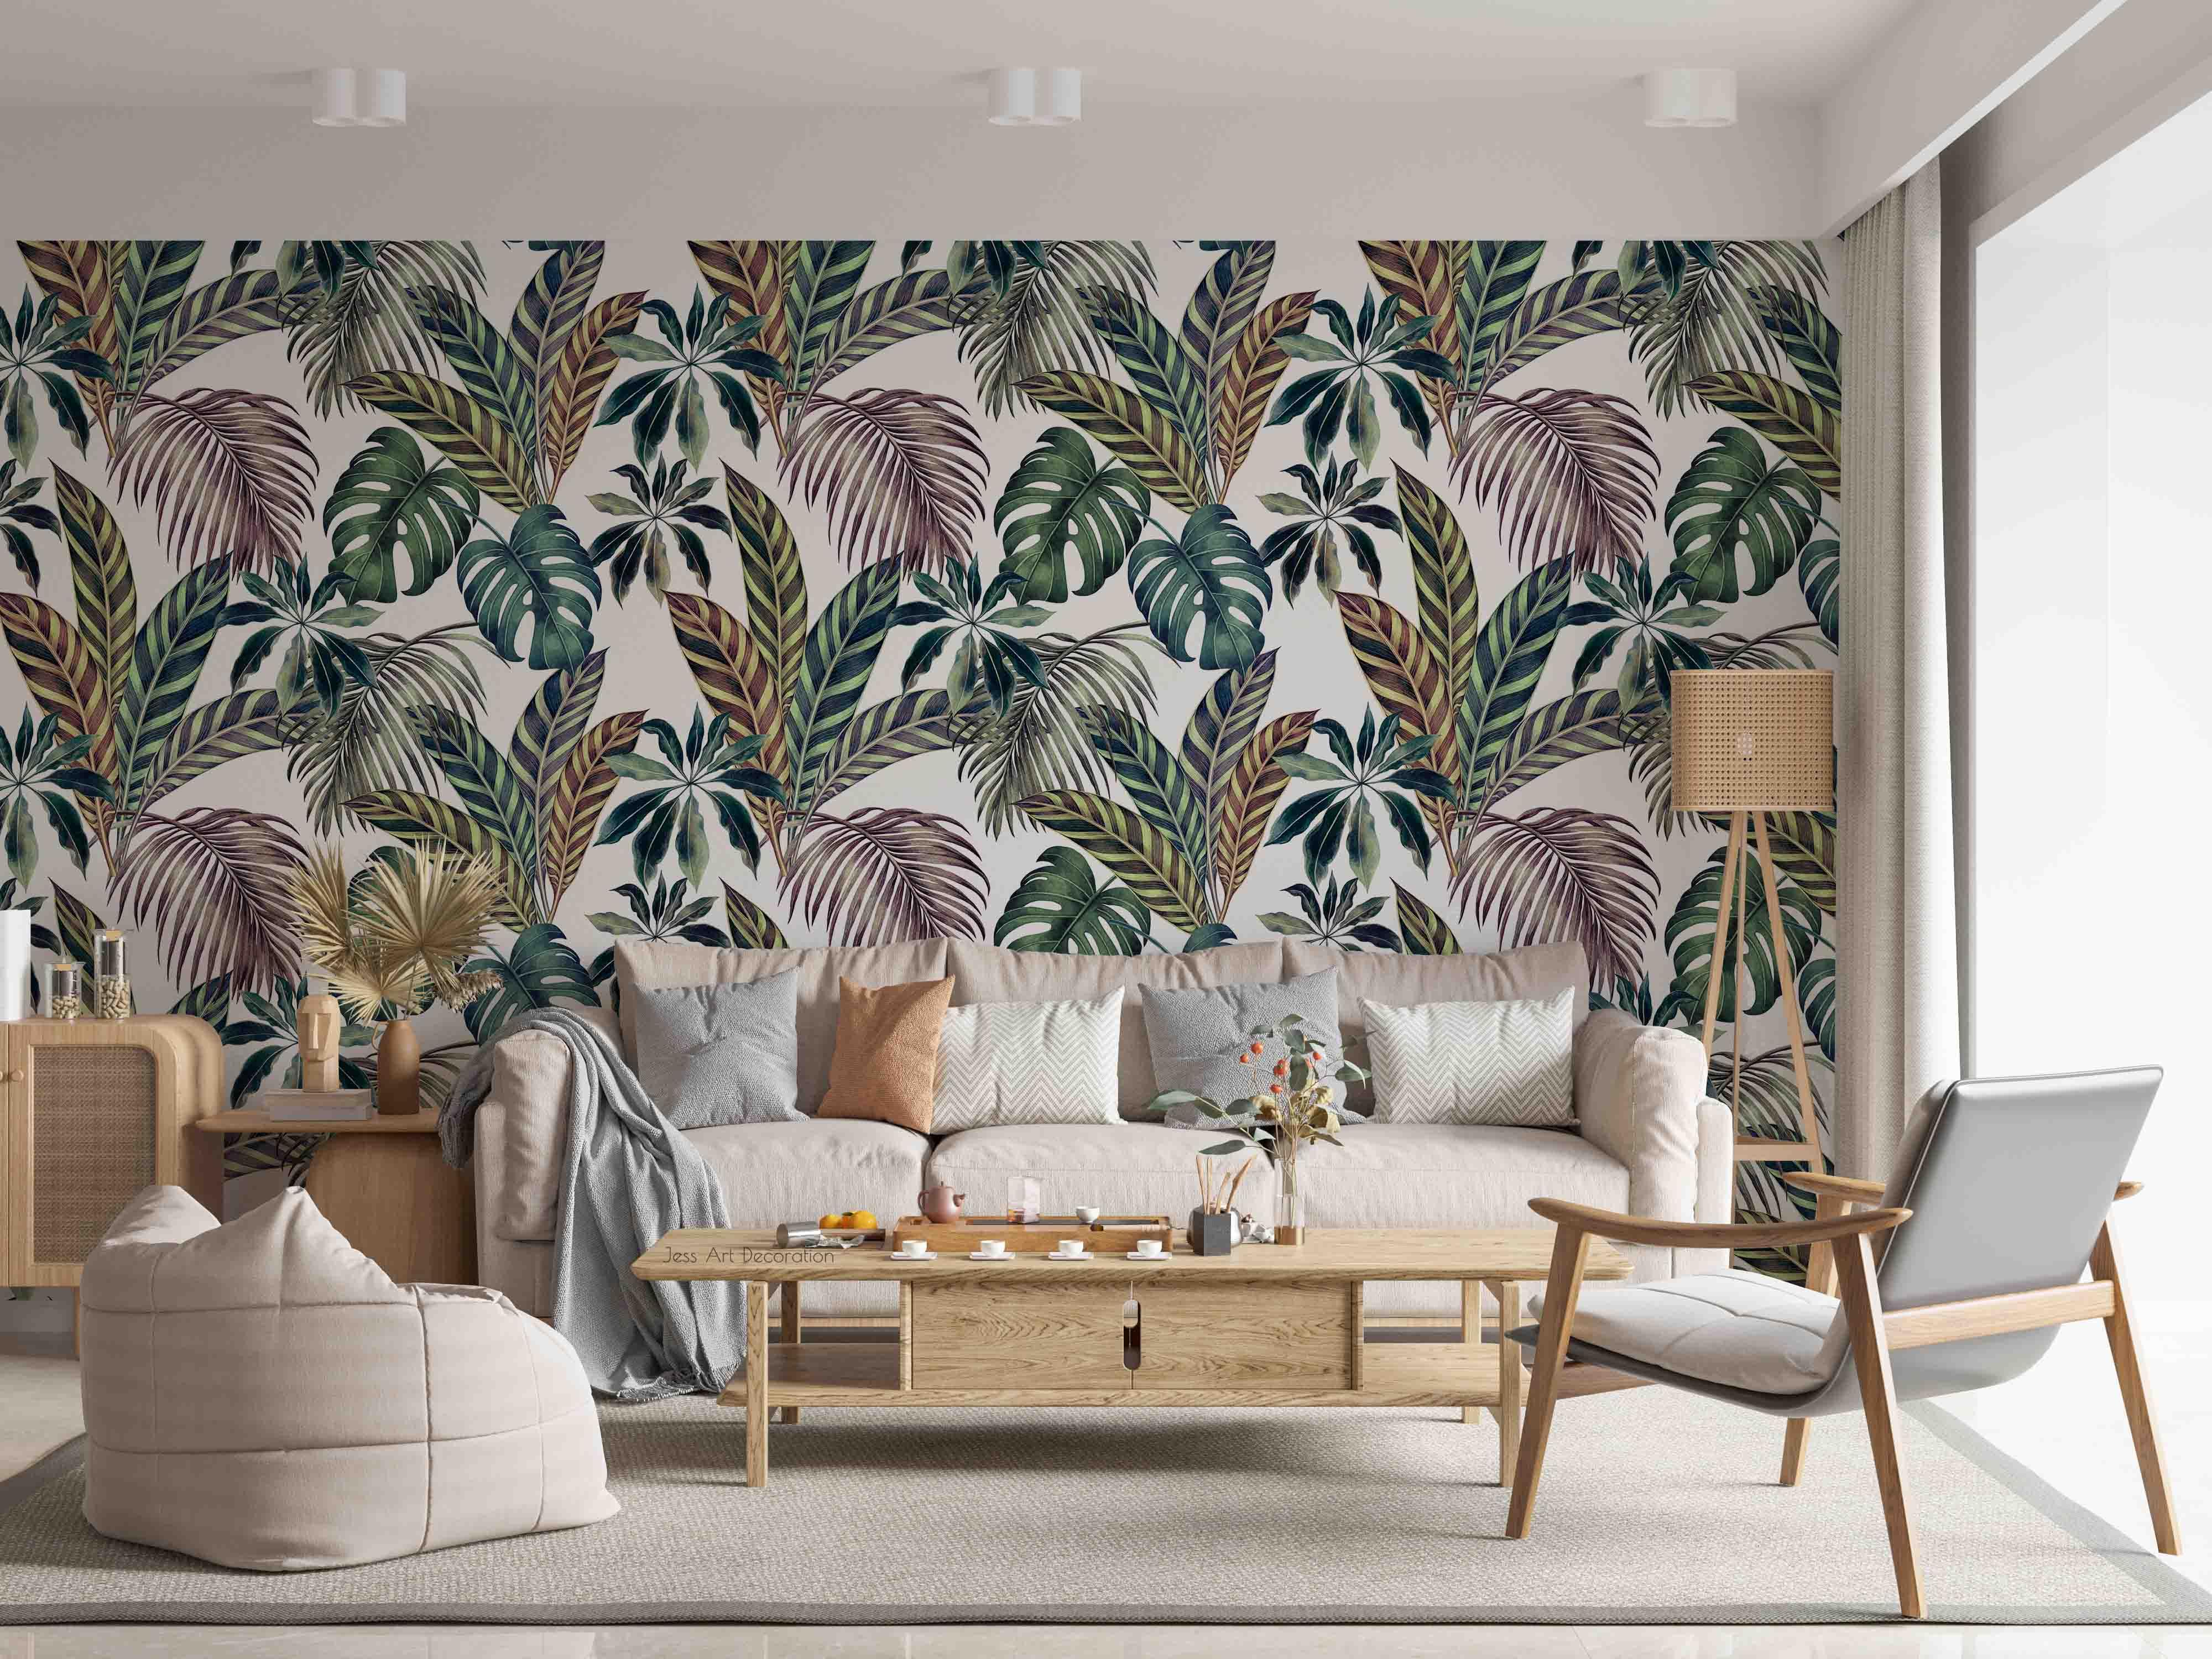 3D Vintage Tropical Plants Leaves Pattern Wall Mural Wallpaper GD 3287- Jess Art Decoration